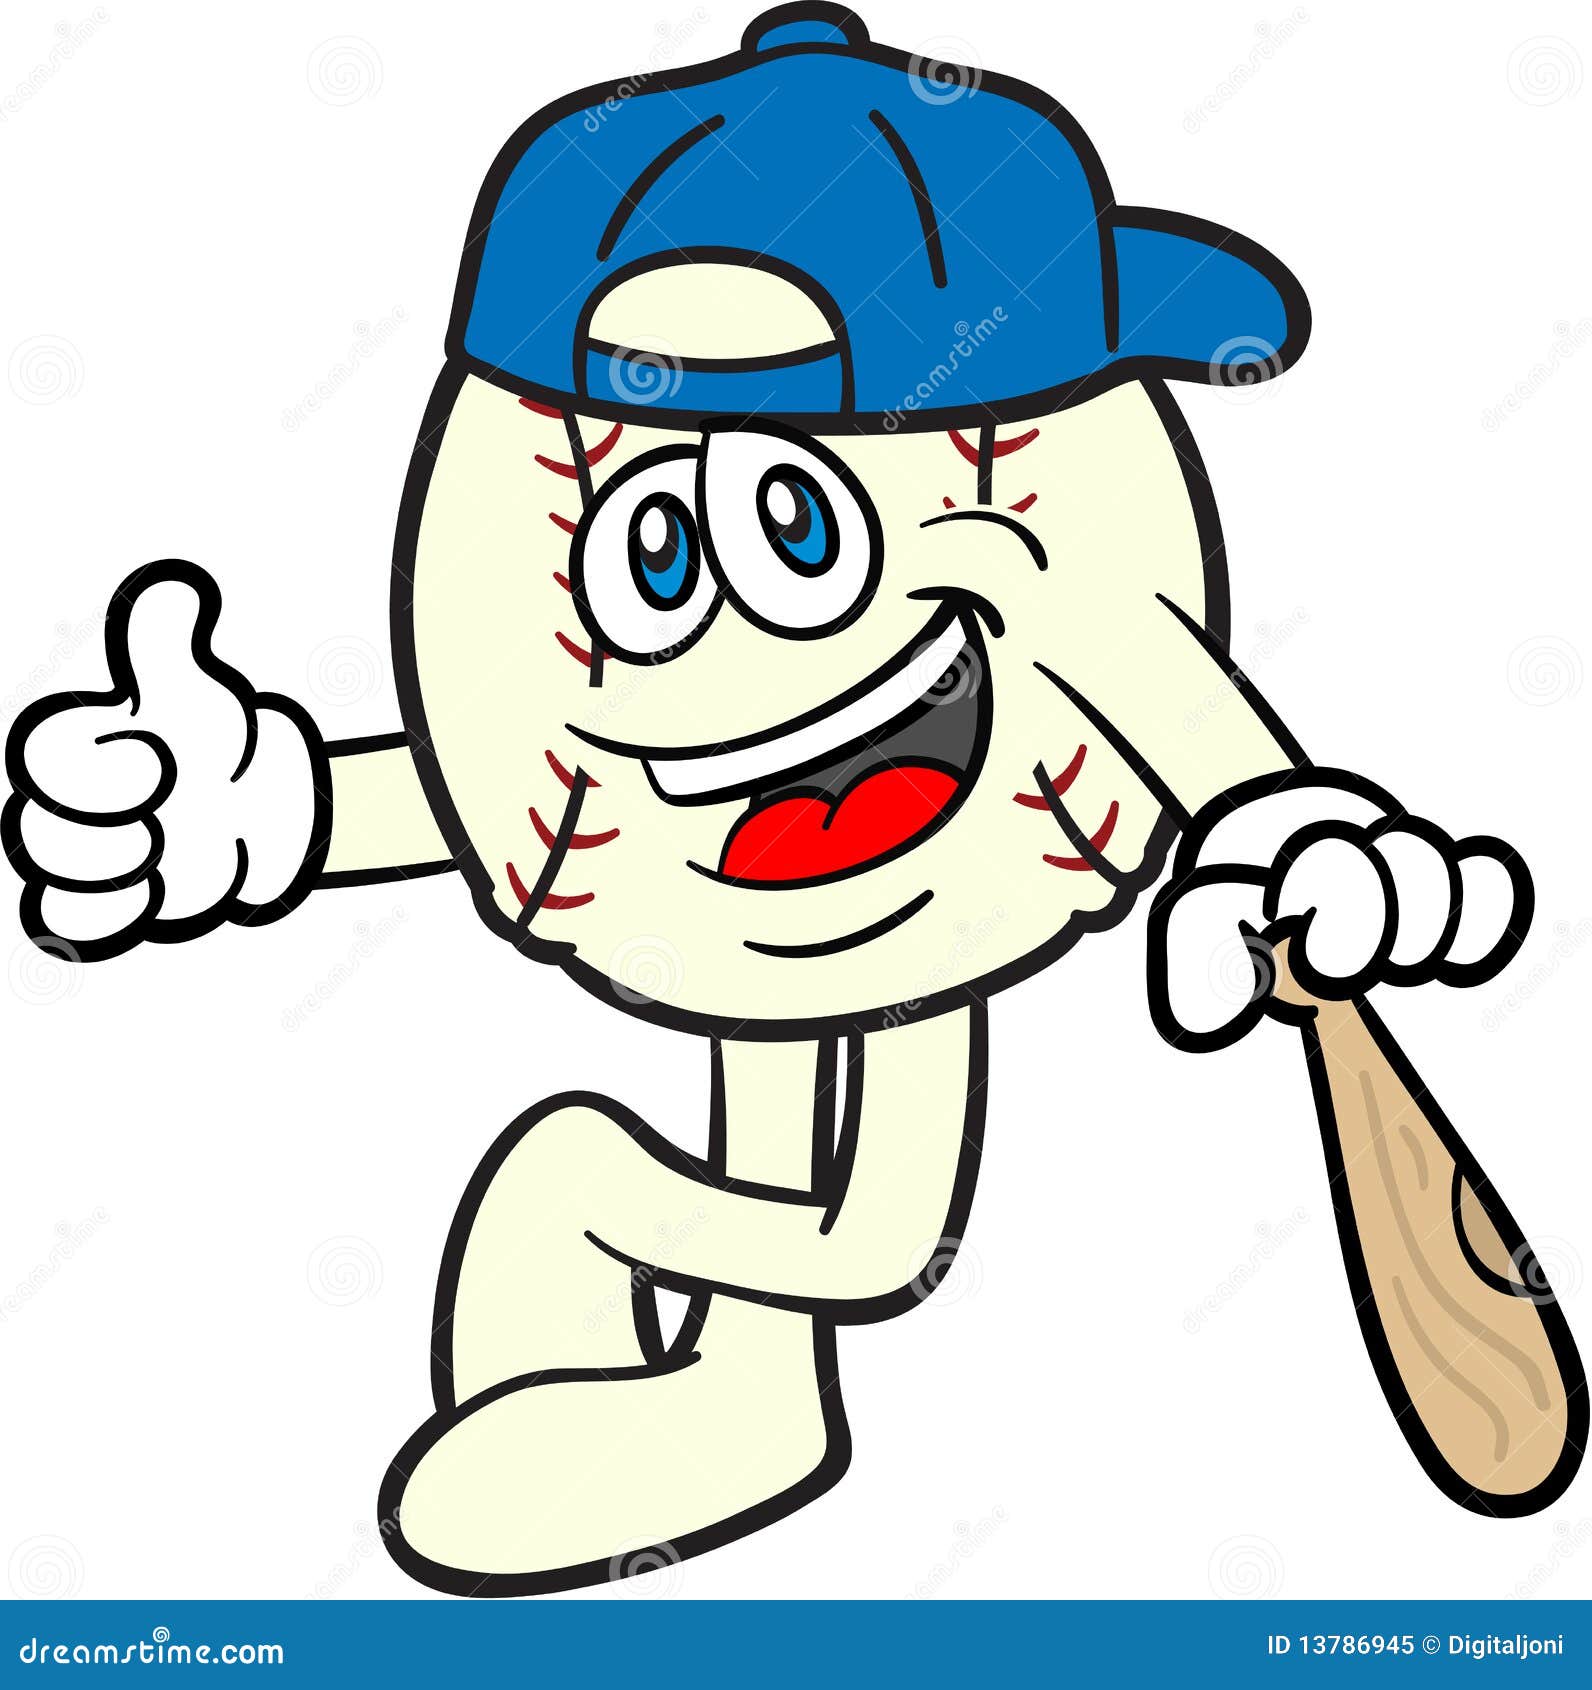 Baseball Cartoon Mascot Thumbs Up Stock Vector ...